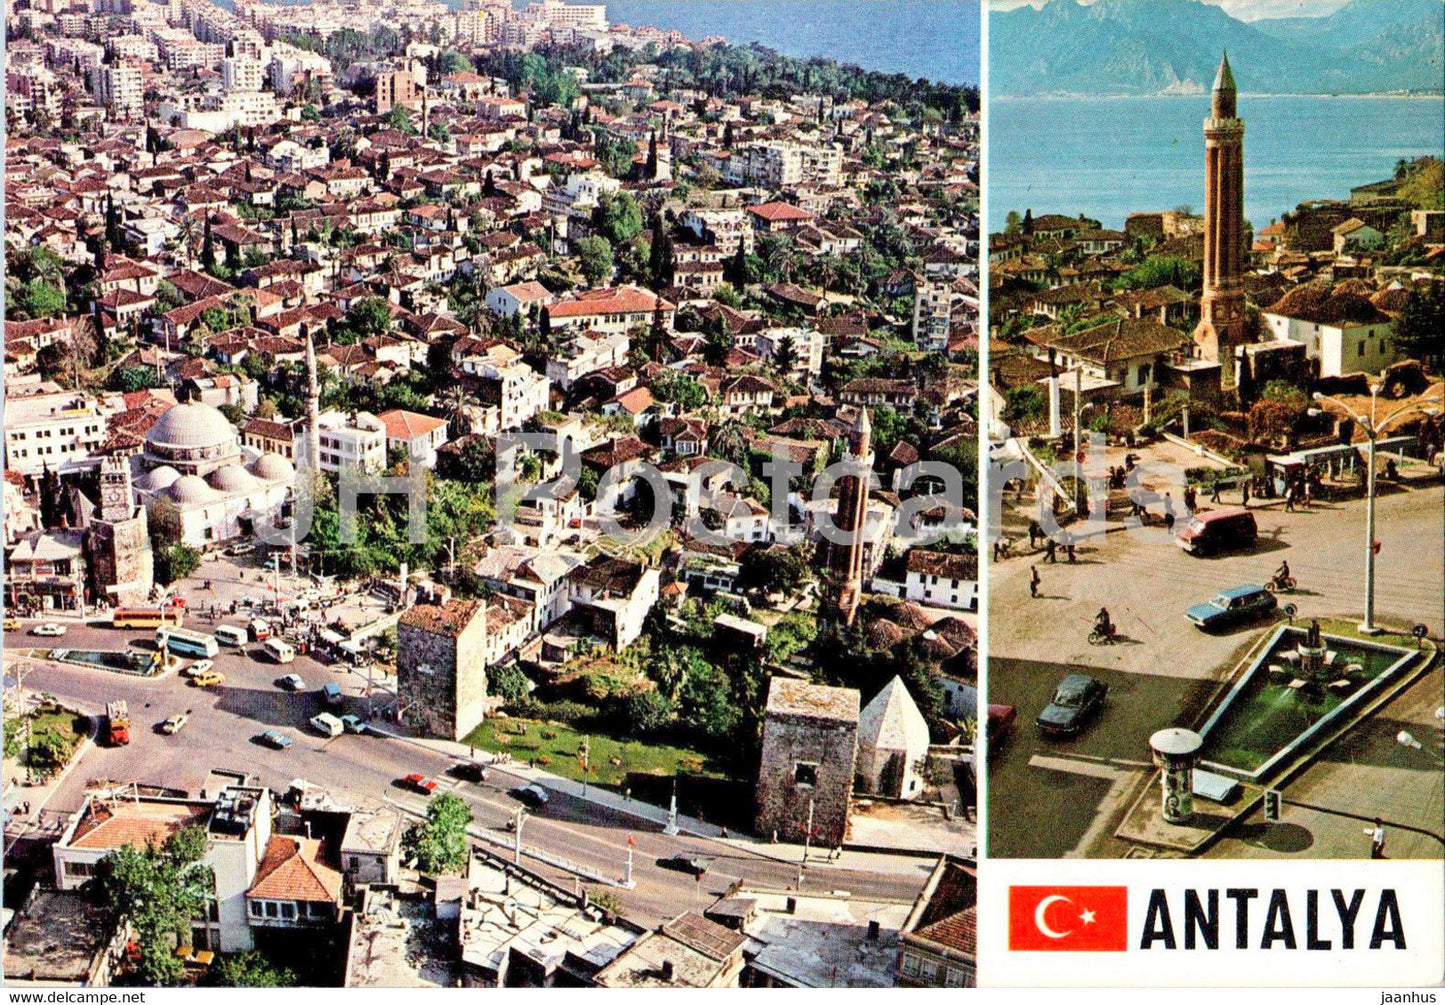 Antalya - A view of Antalya from Plane - 07-109 - Turkey - unused - JH Postcards